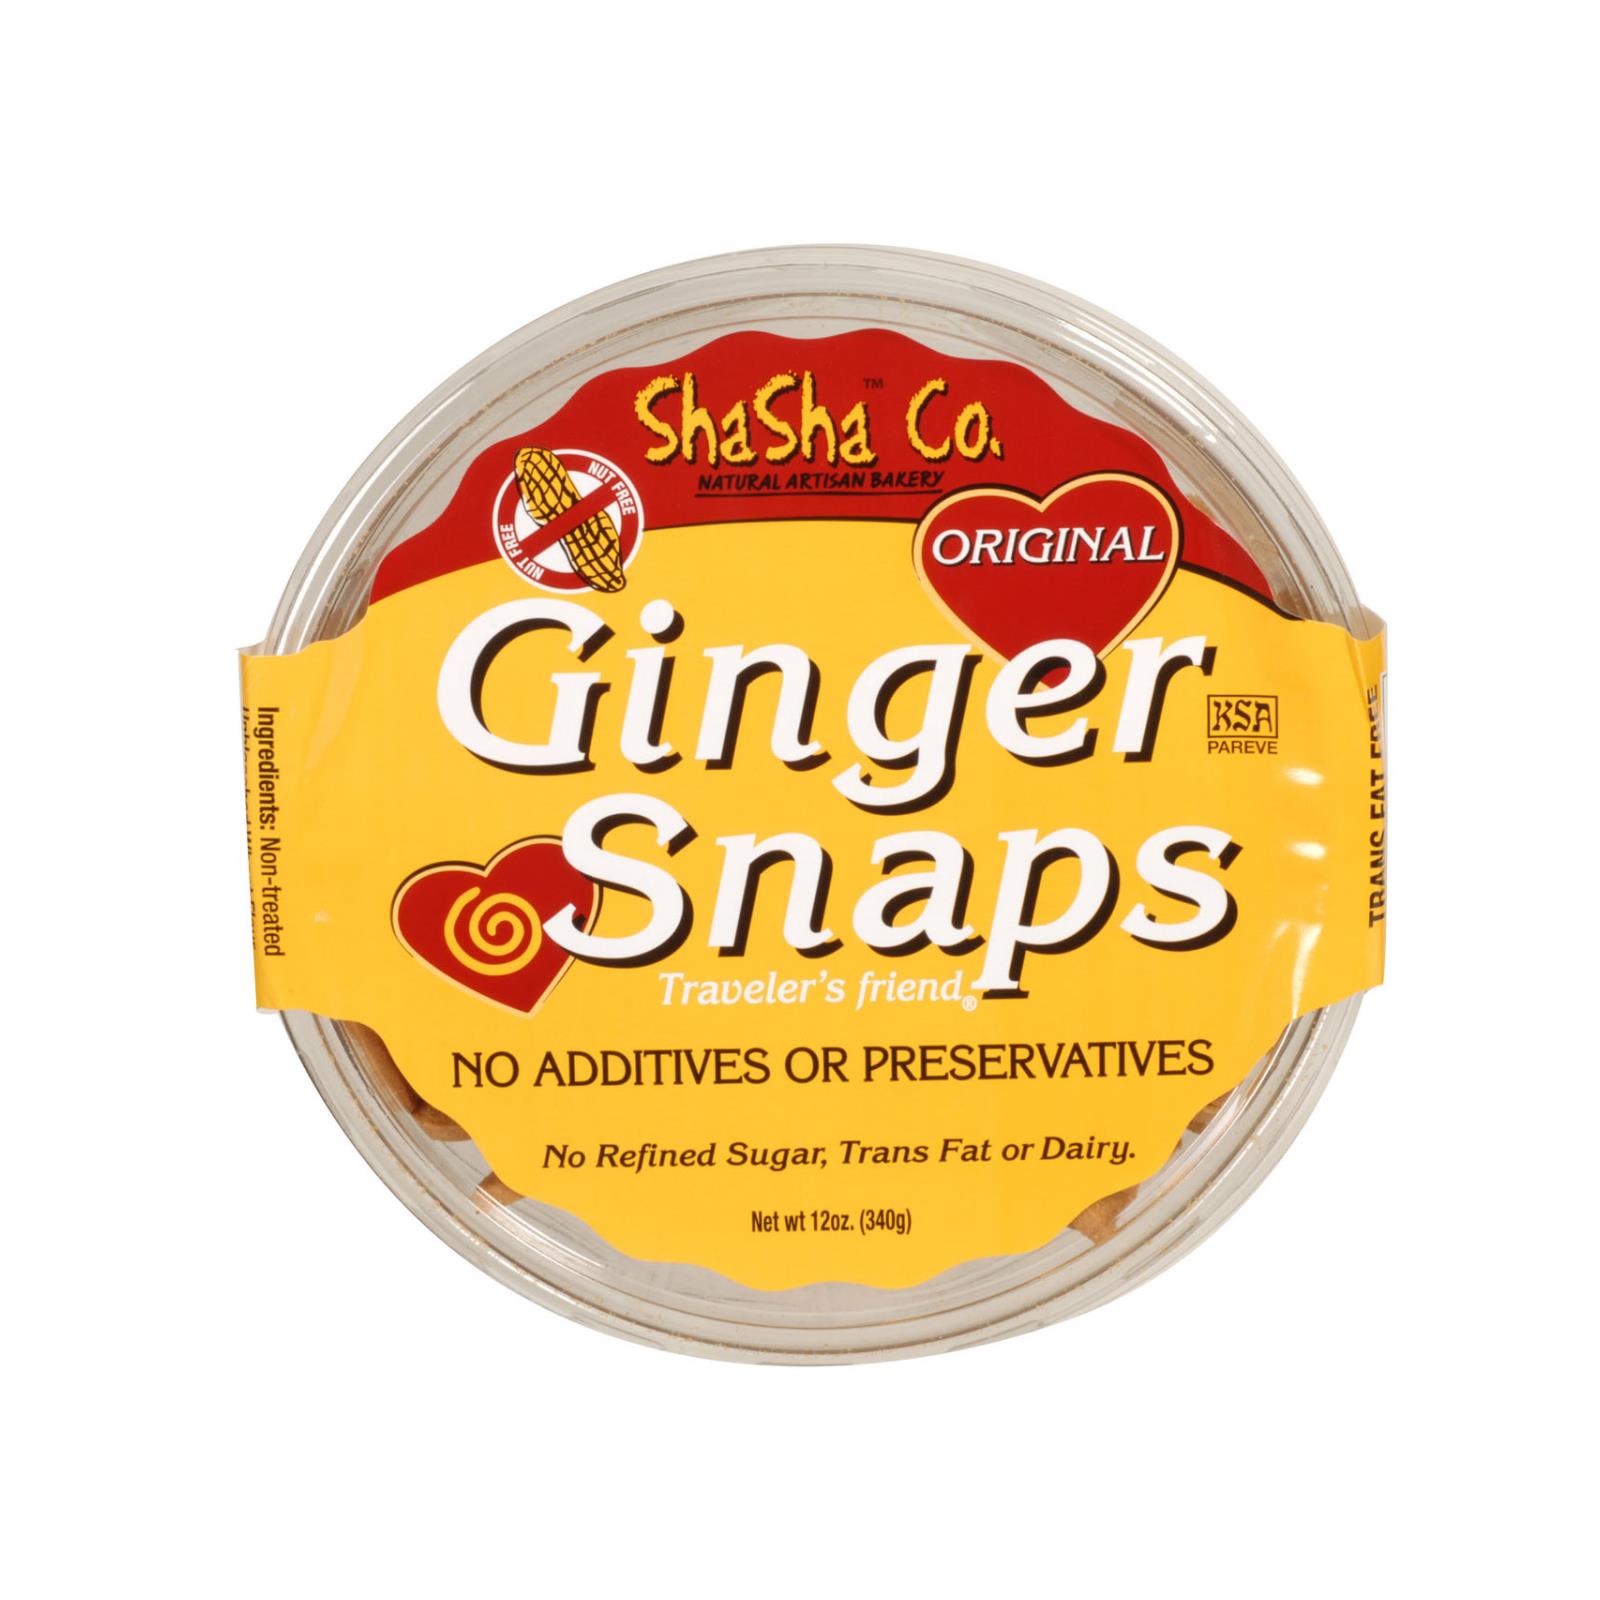 Shasha Bread Original Ginger Snap Cookies - 16개 묶음상품 - 12 oz